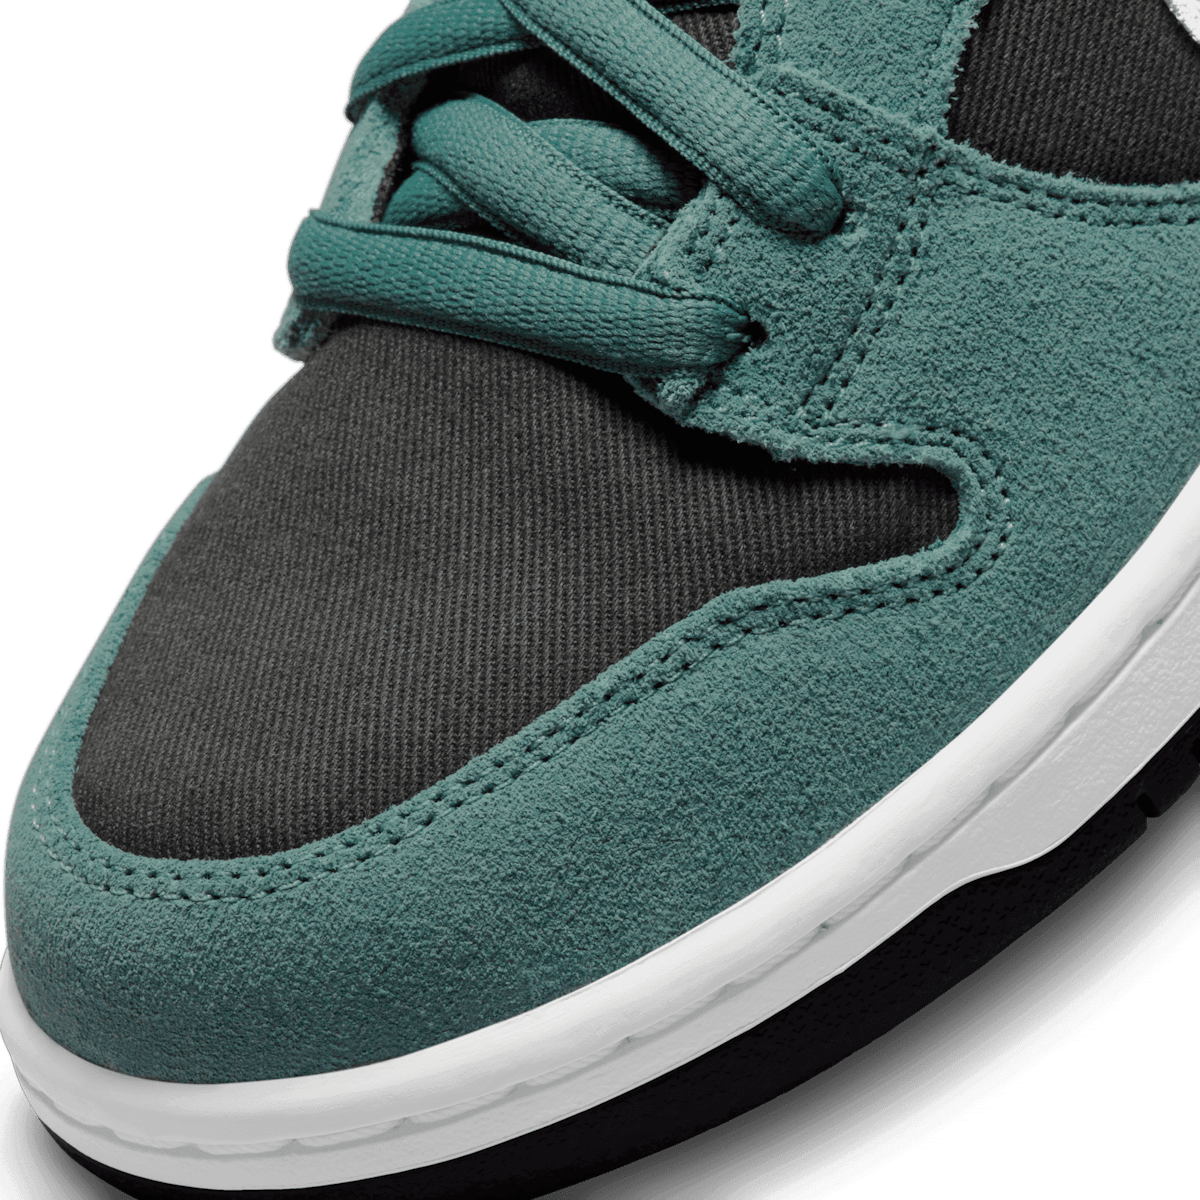 Nike SB Dunk High Green Suede Angle 4